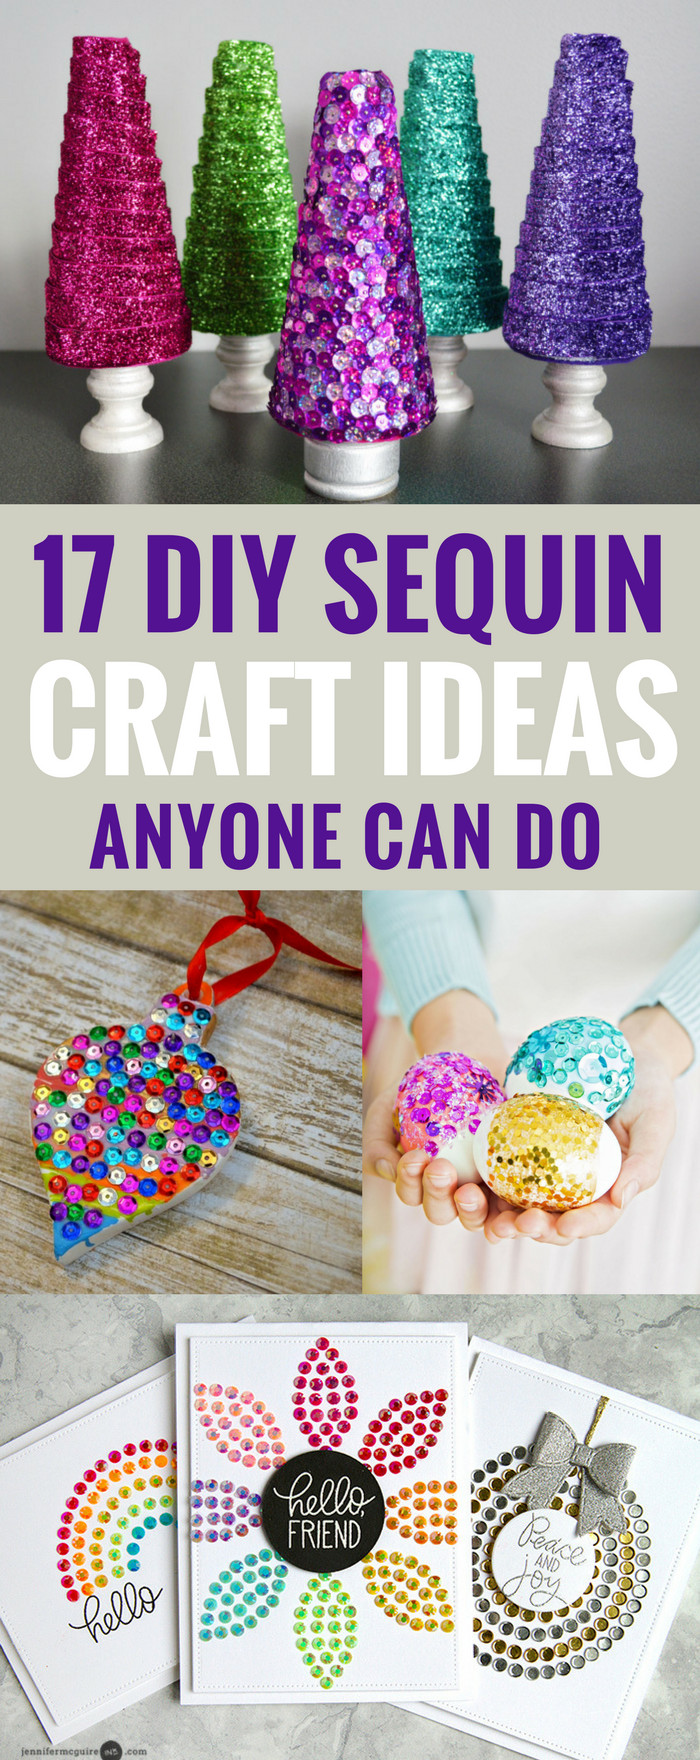 DIY Crafts Kids
 17 DIY Sequin Crafts Ideas Anyone Can Do